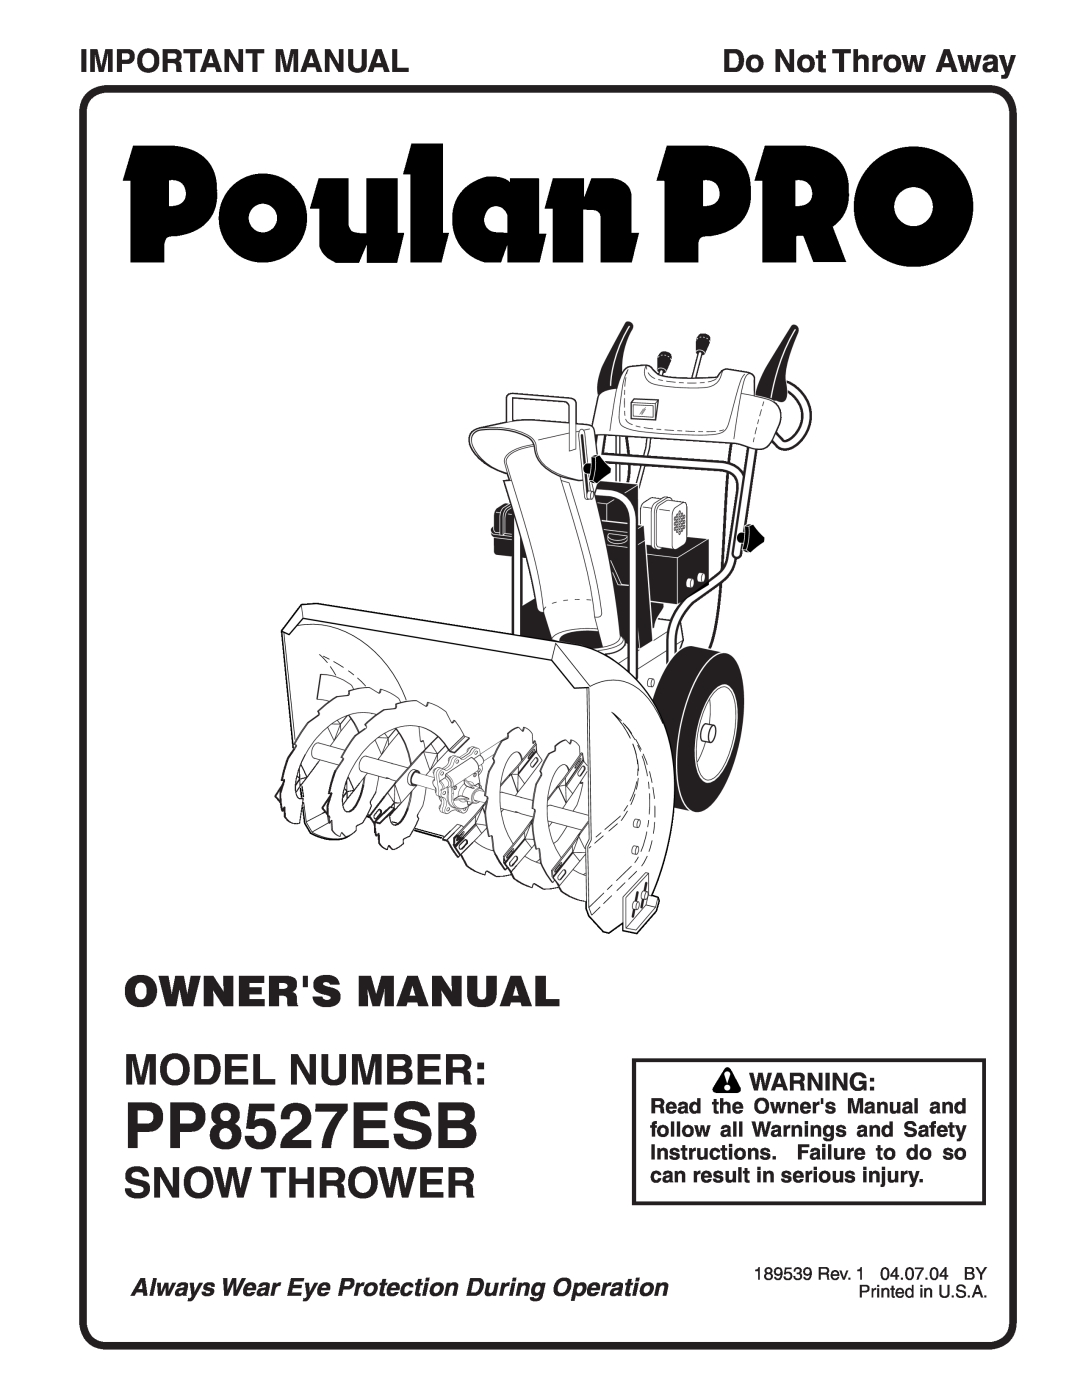 Poulan 189539 owner manual Snow Thrower, Important Manual, PP8527ESB, Do Not Throw Away 